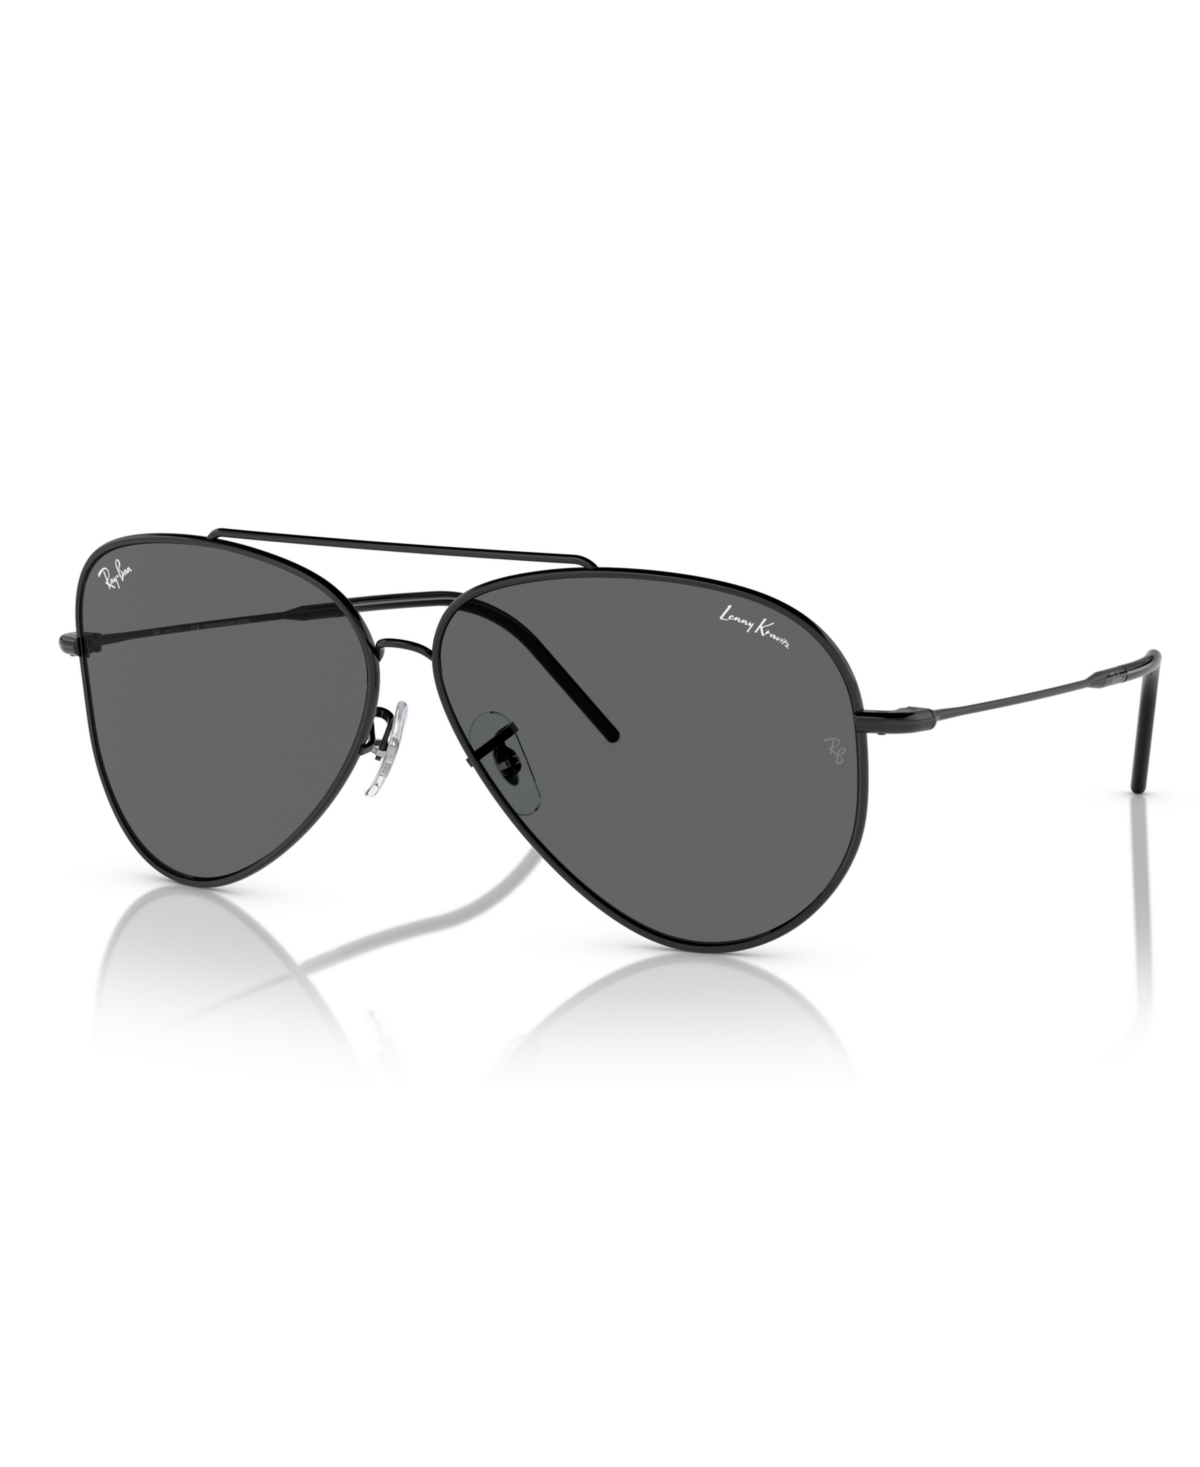 Unisex Sunglasses, Aviator Reverse RBR0101 - Black